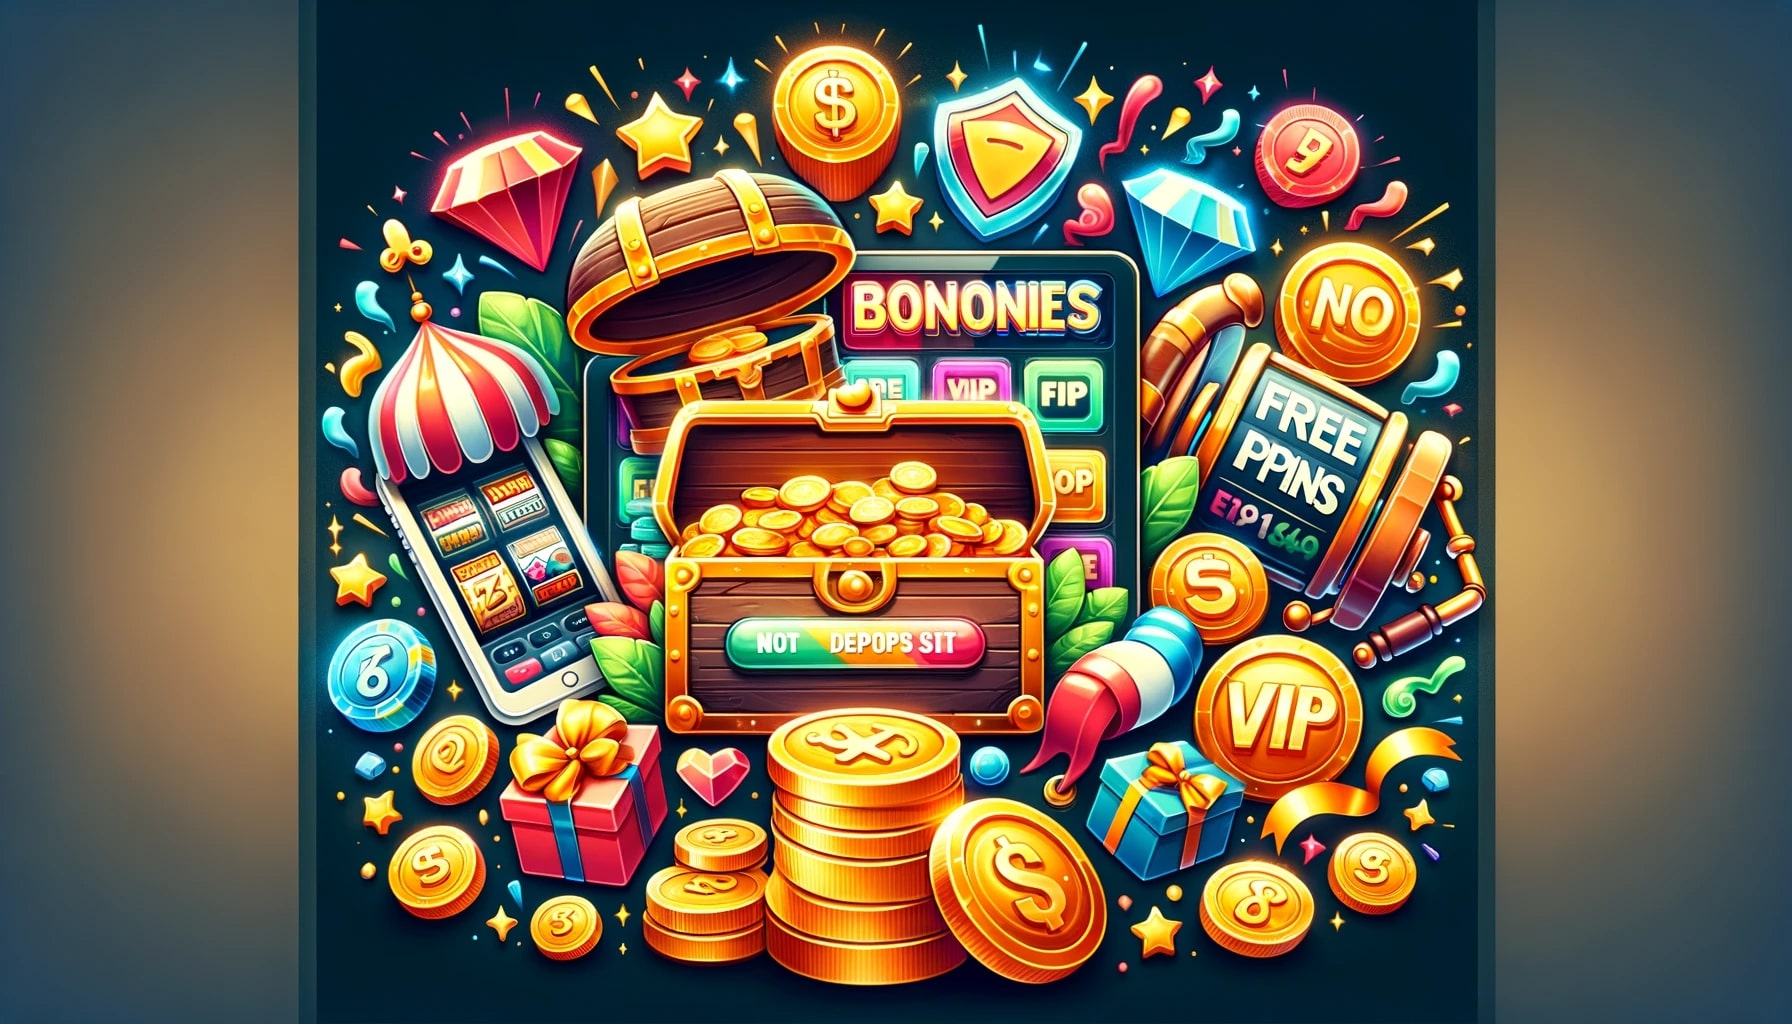 variety of symbols representing different types of bonuses and VIP rewards